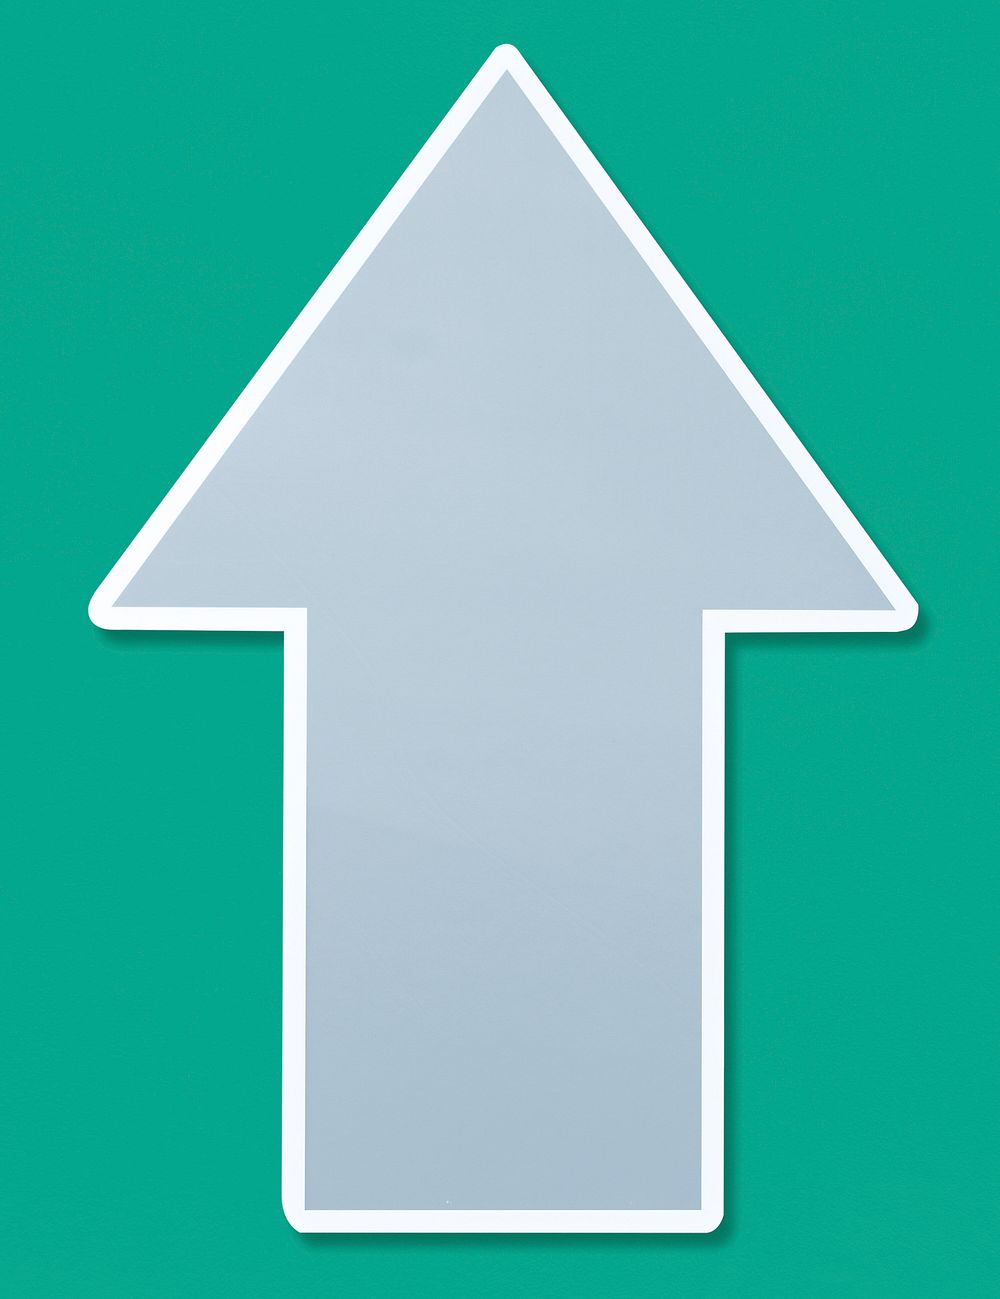 Blue arrow pointing upwards icon